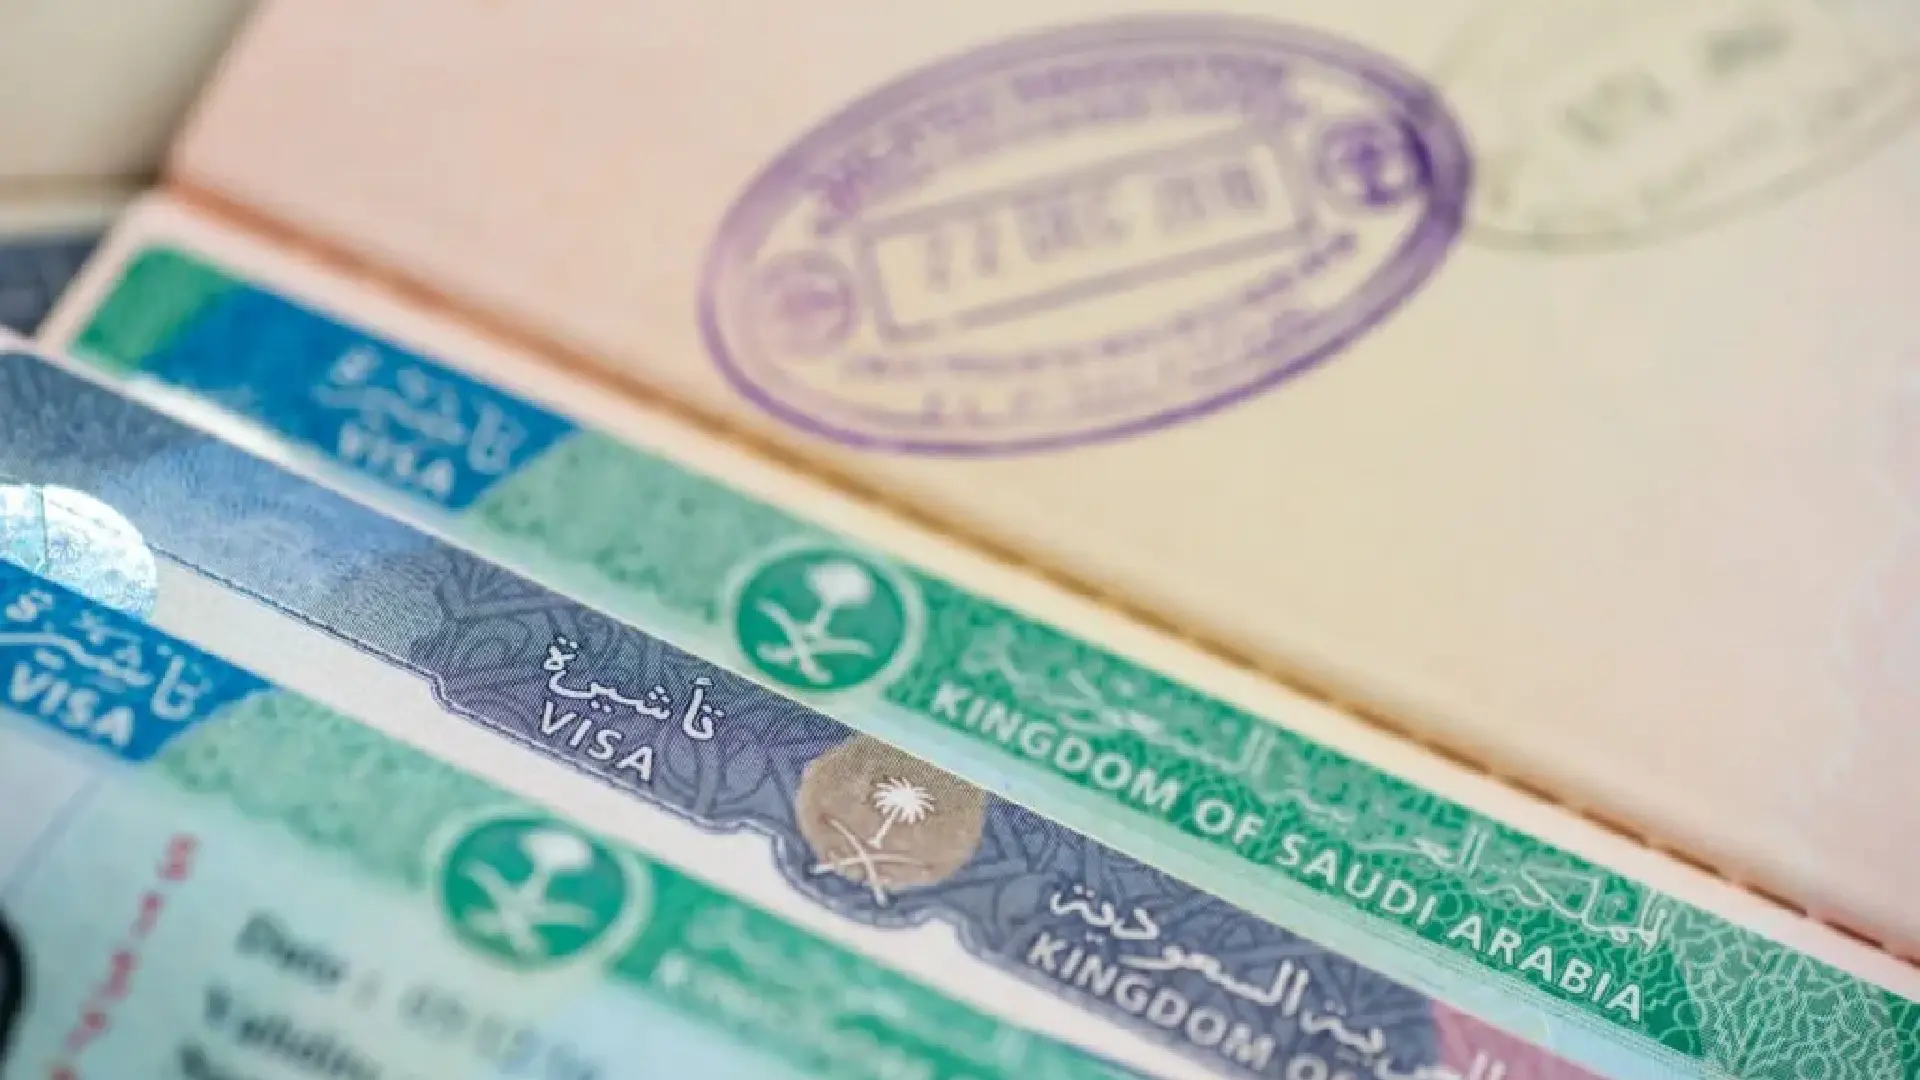 Saudi Arabia visa requirements for UAE residents